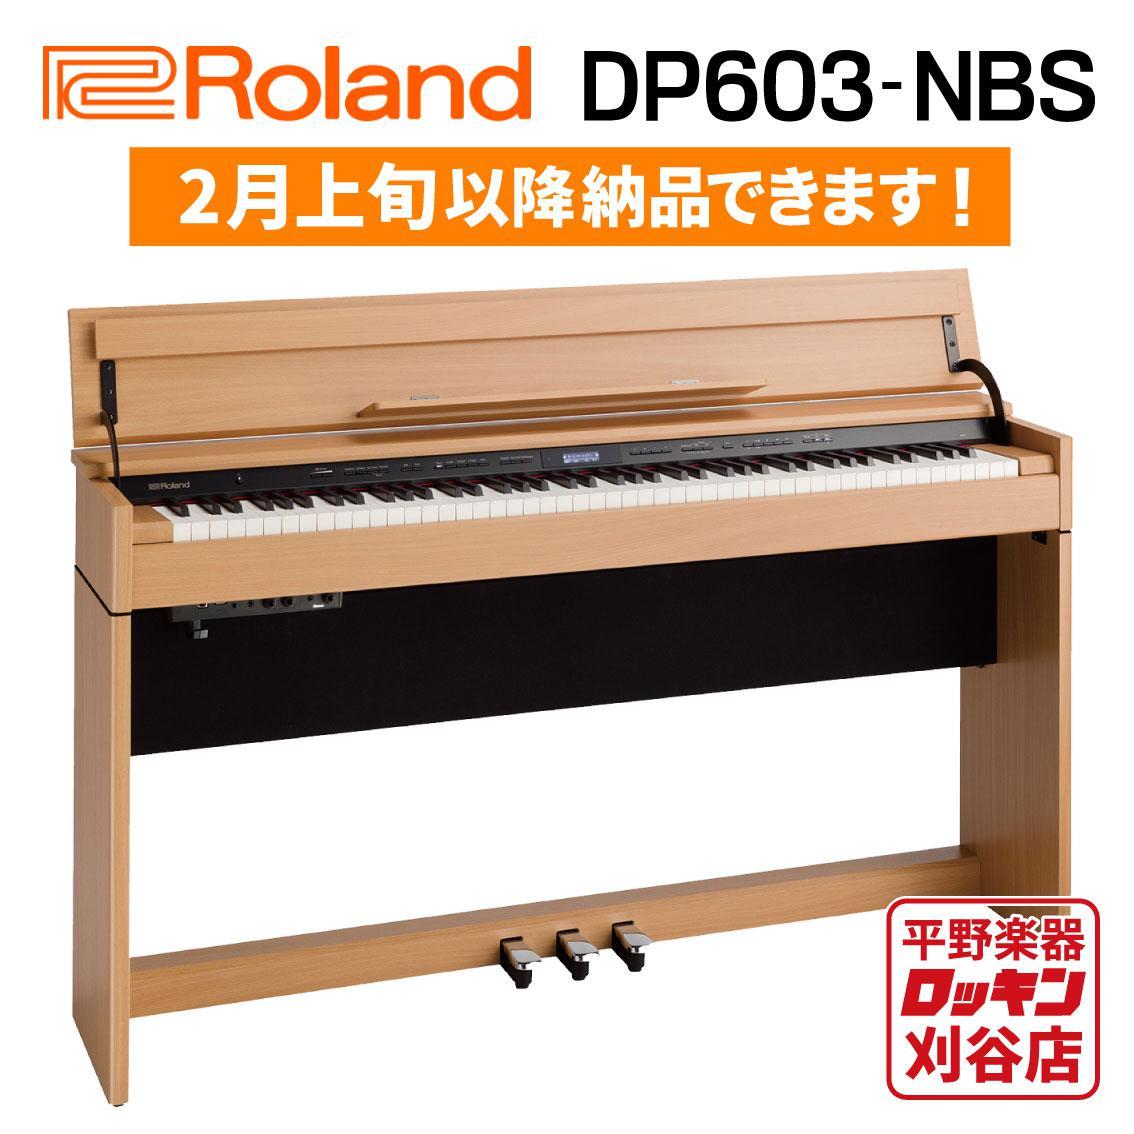 Roland DP603-NBS(ナチュラルビーチ調仕上げ)【東海4県配送設置無料